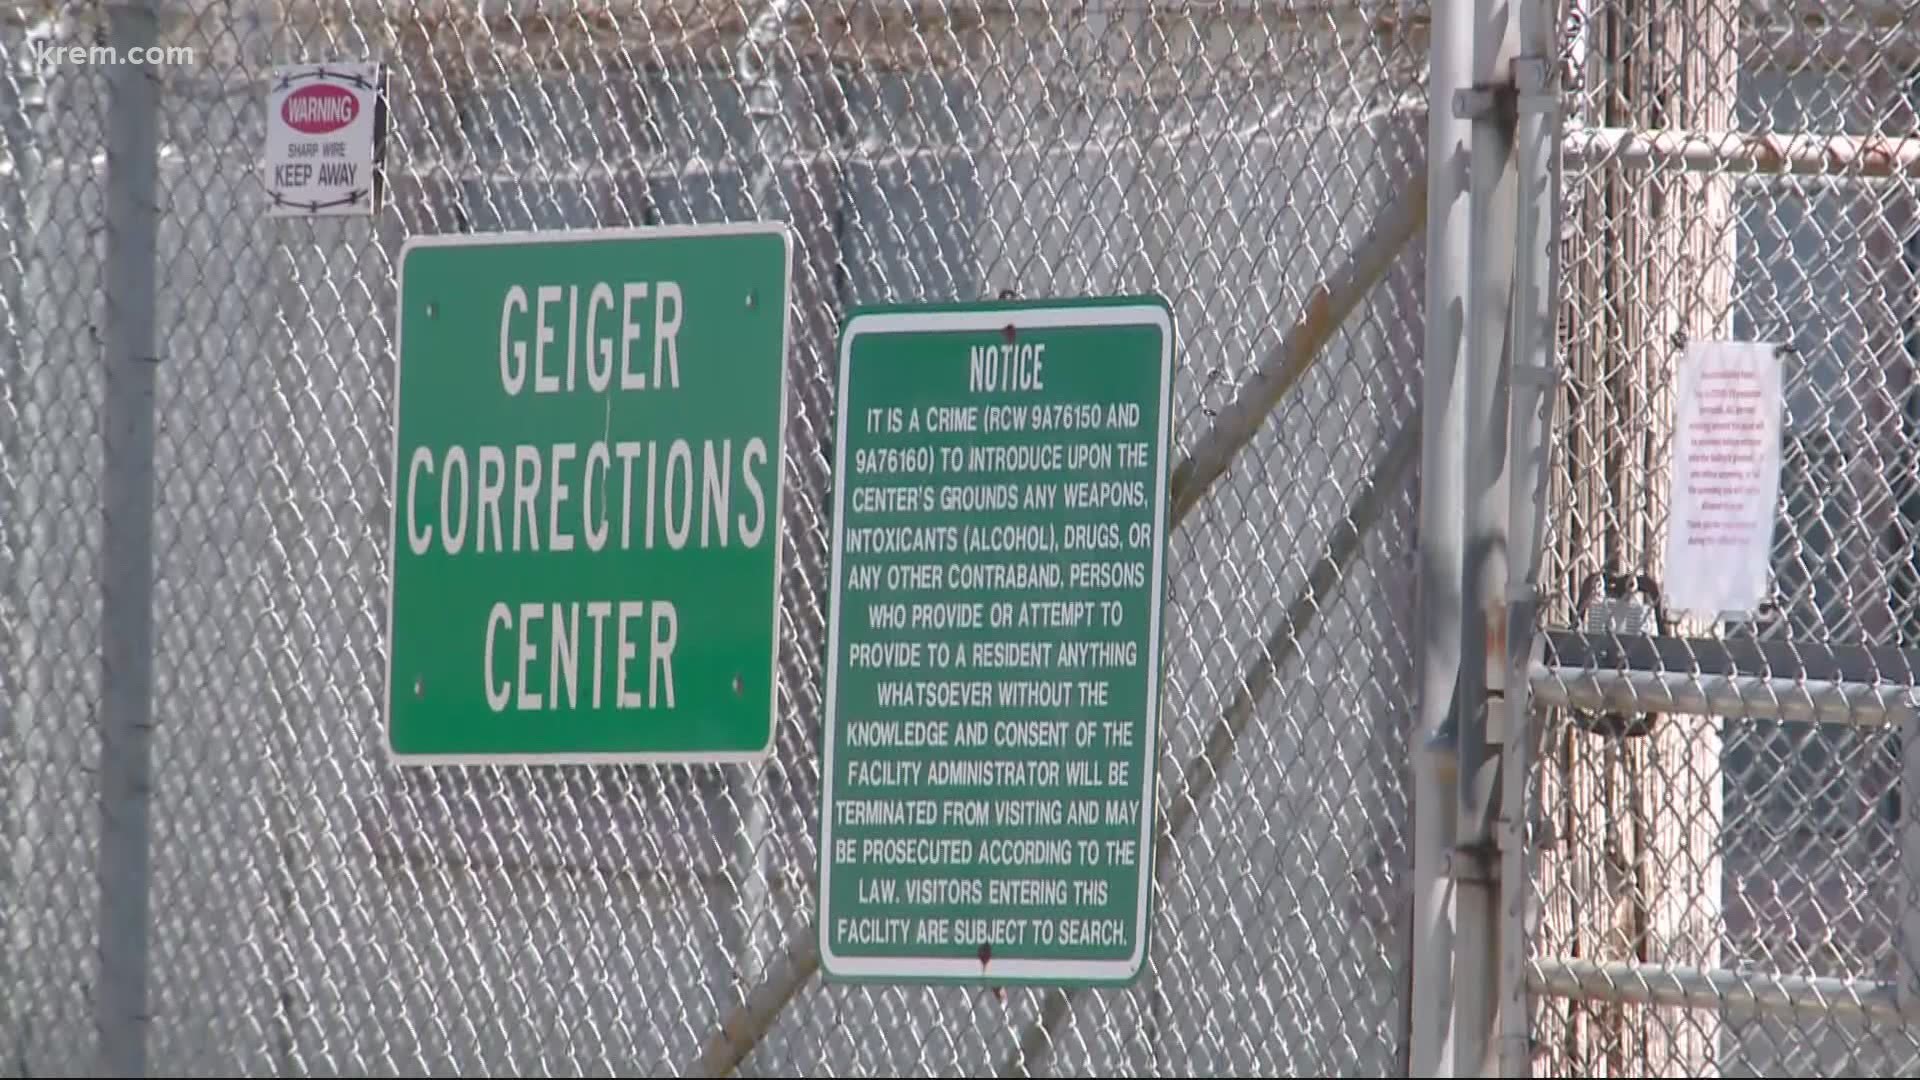 KREM is monitoring several outbreaks at Eastern Washington jails and prisons.